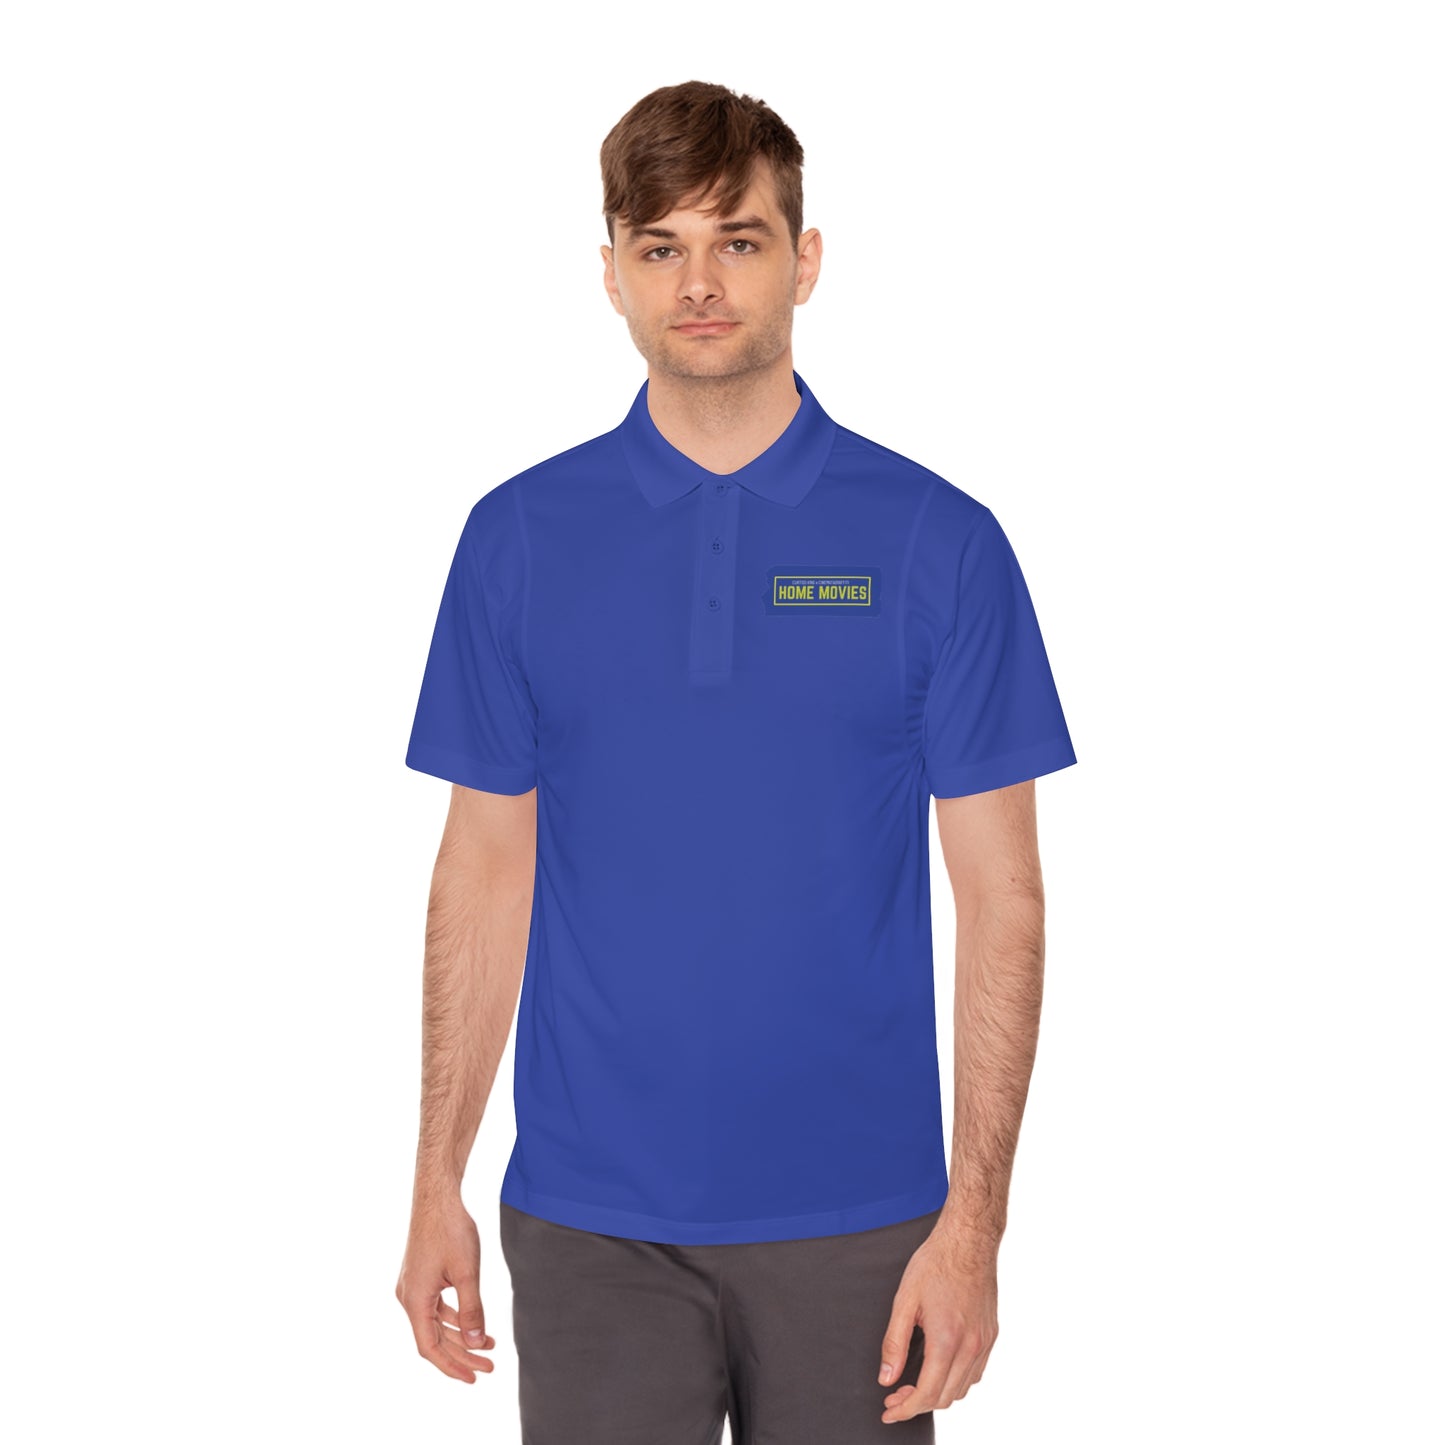 Home Movies Employee - Men's Sport Polo Shirt - Light Mode